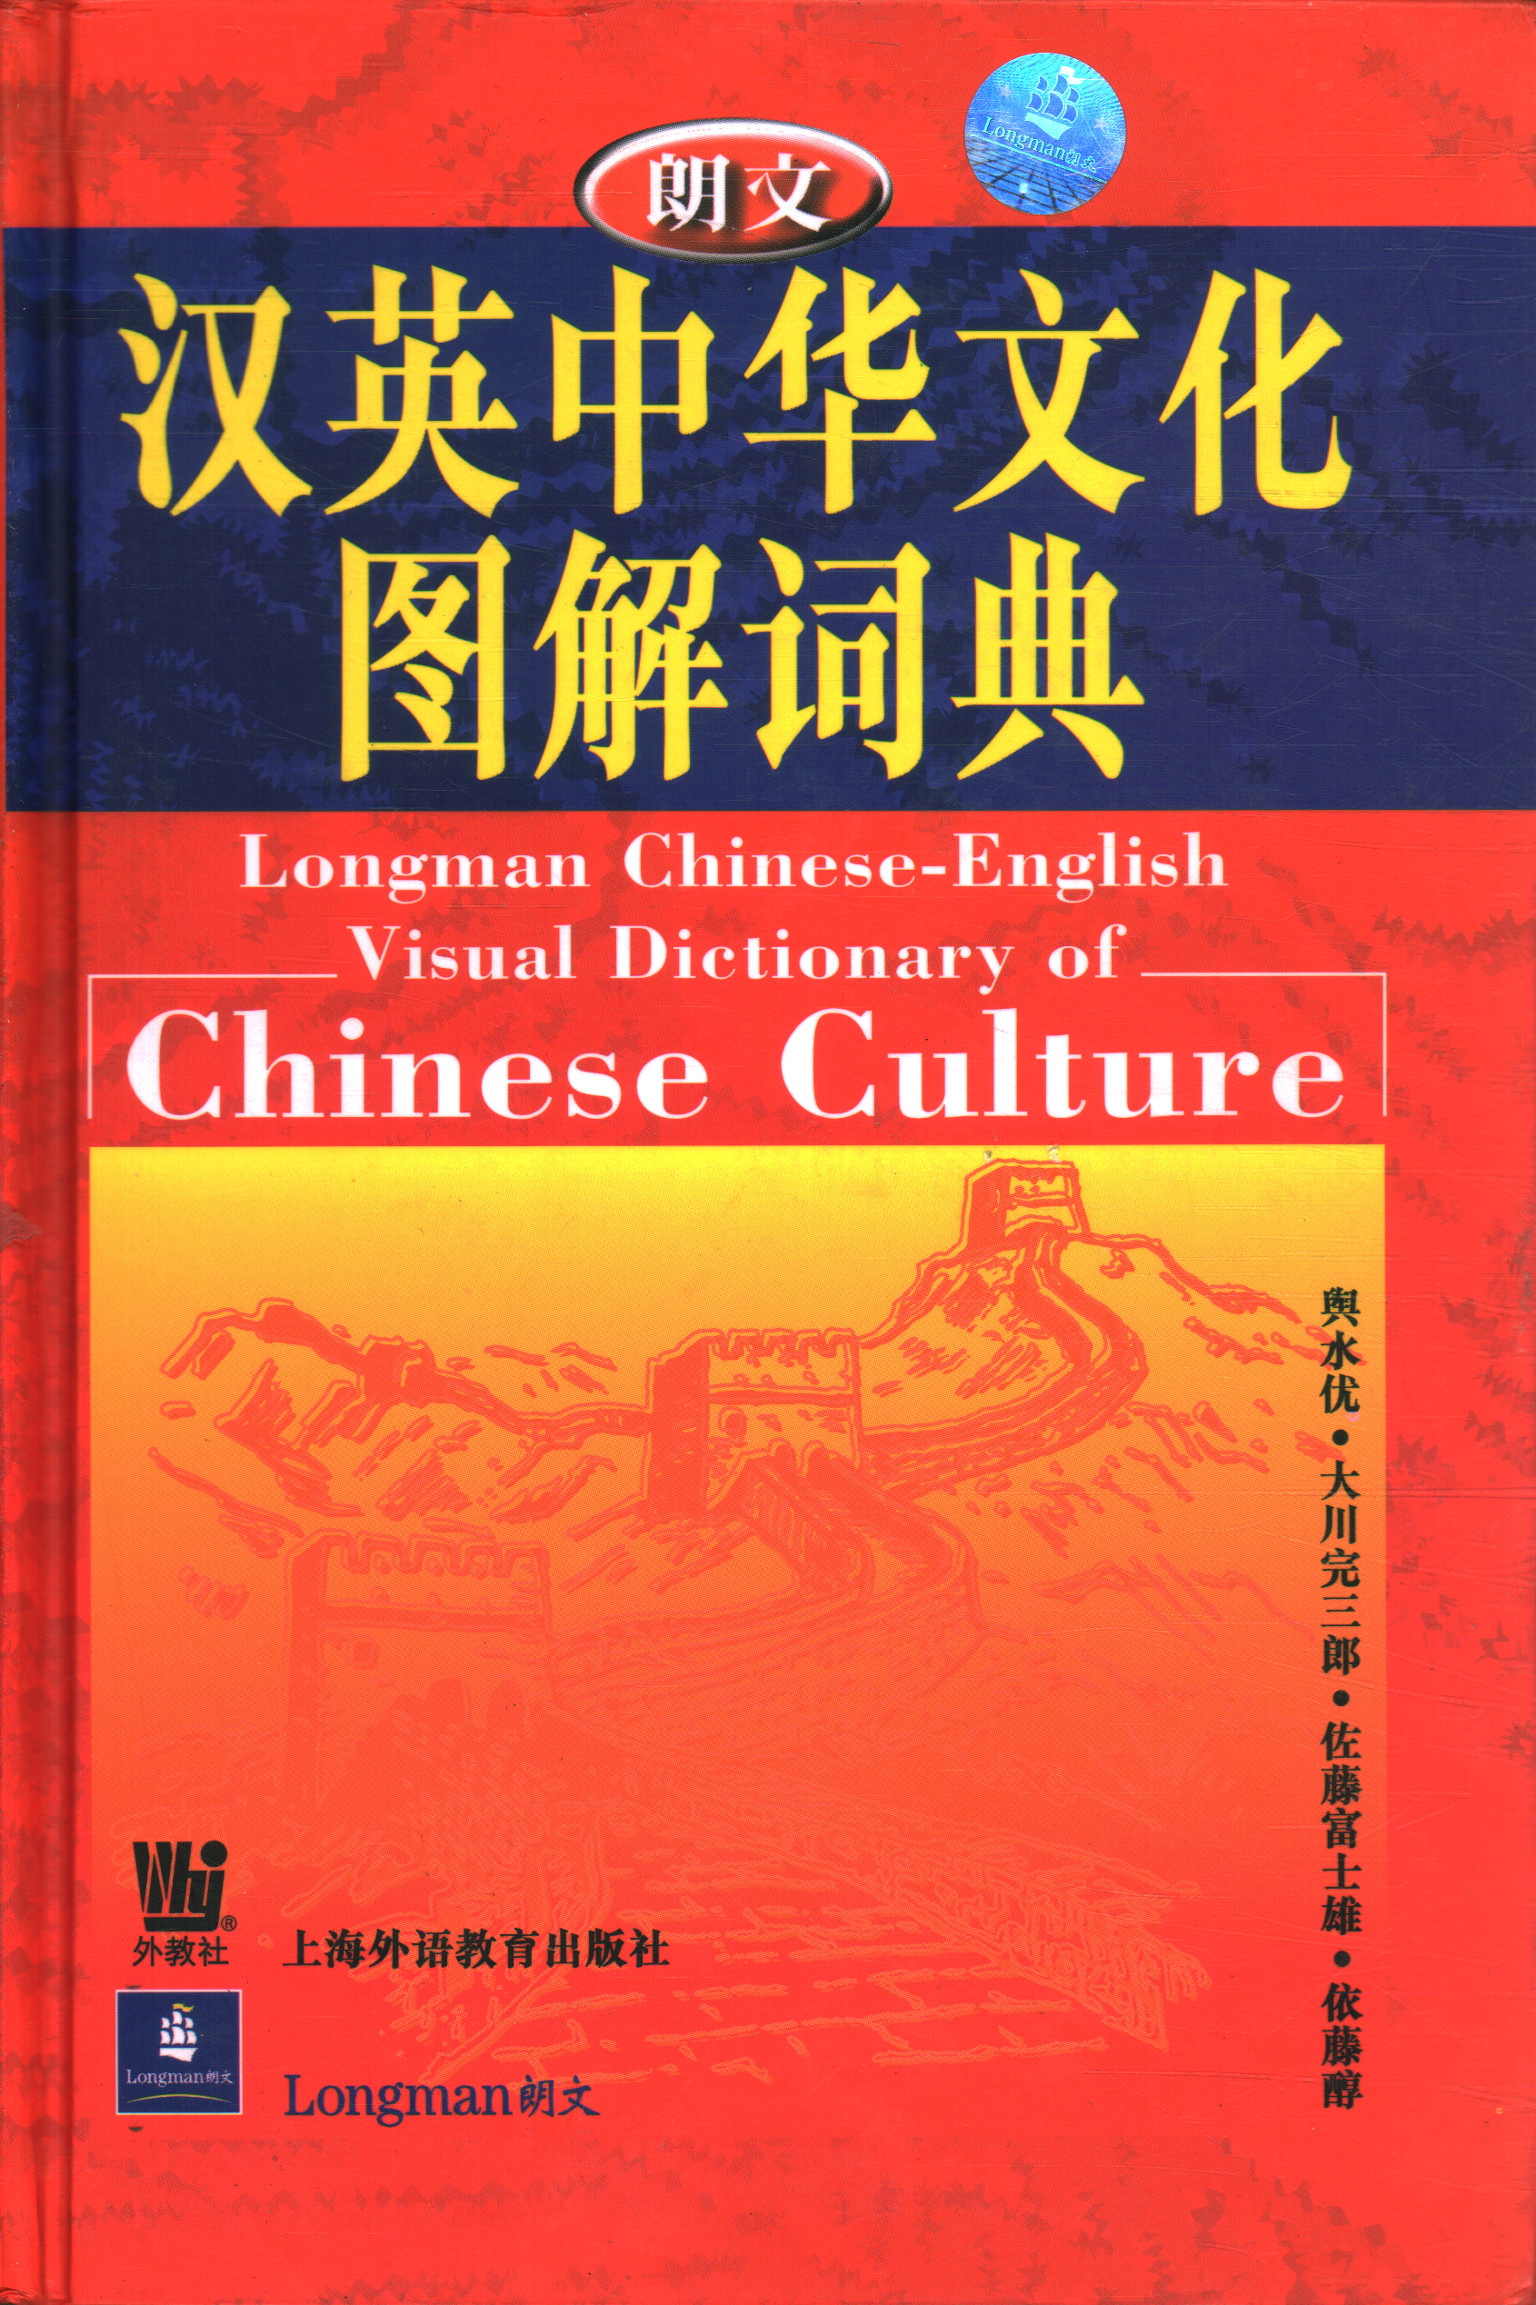 Dictionnaire visuel Longman chinois-anglais